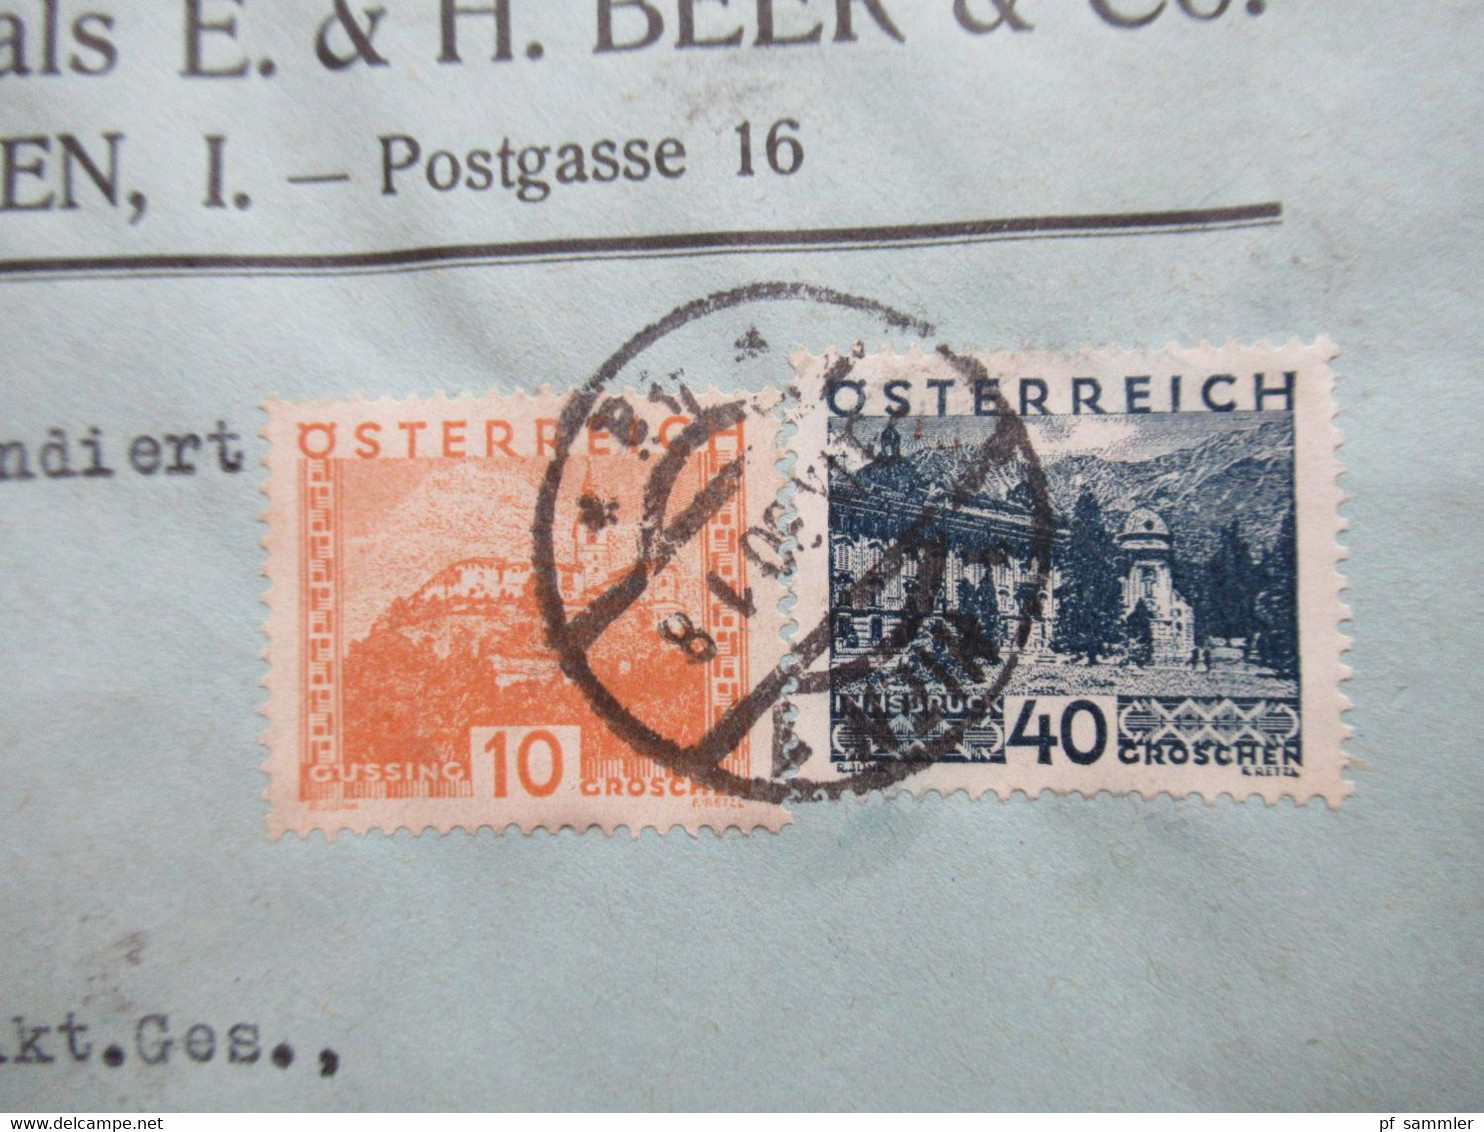 1930 Landschaften Nr. 498 U. 507 MiF Einschreiben Wien 1 Krawatten Fabrik H. Beer & Co. Rückseitig 3x Gesiegelt - Briefe U. Dokumente